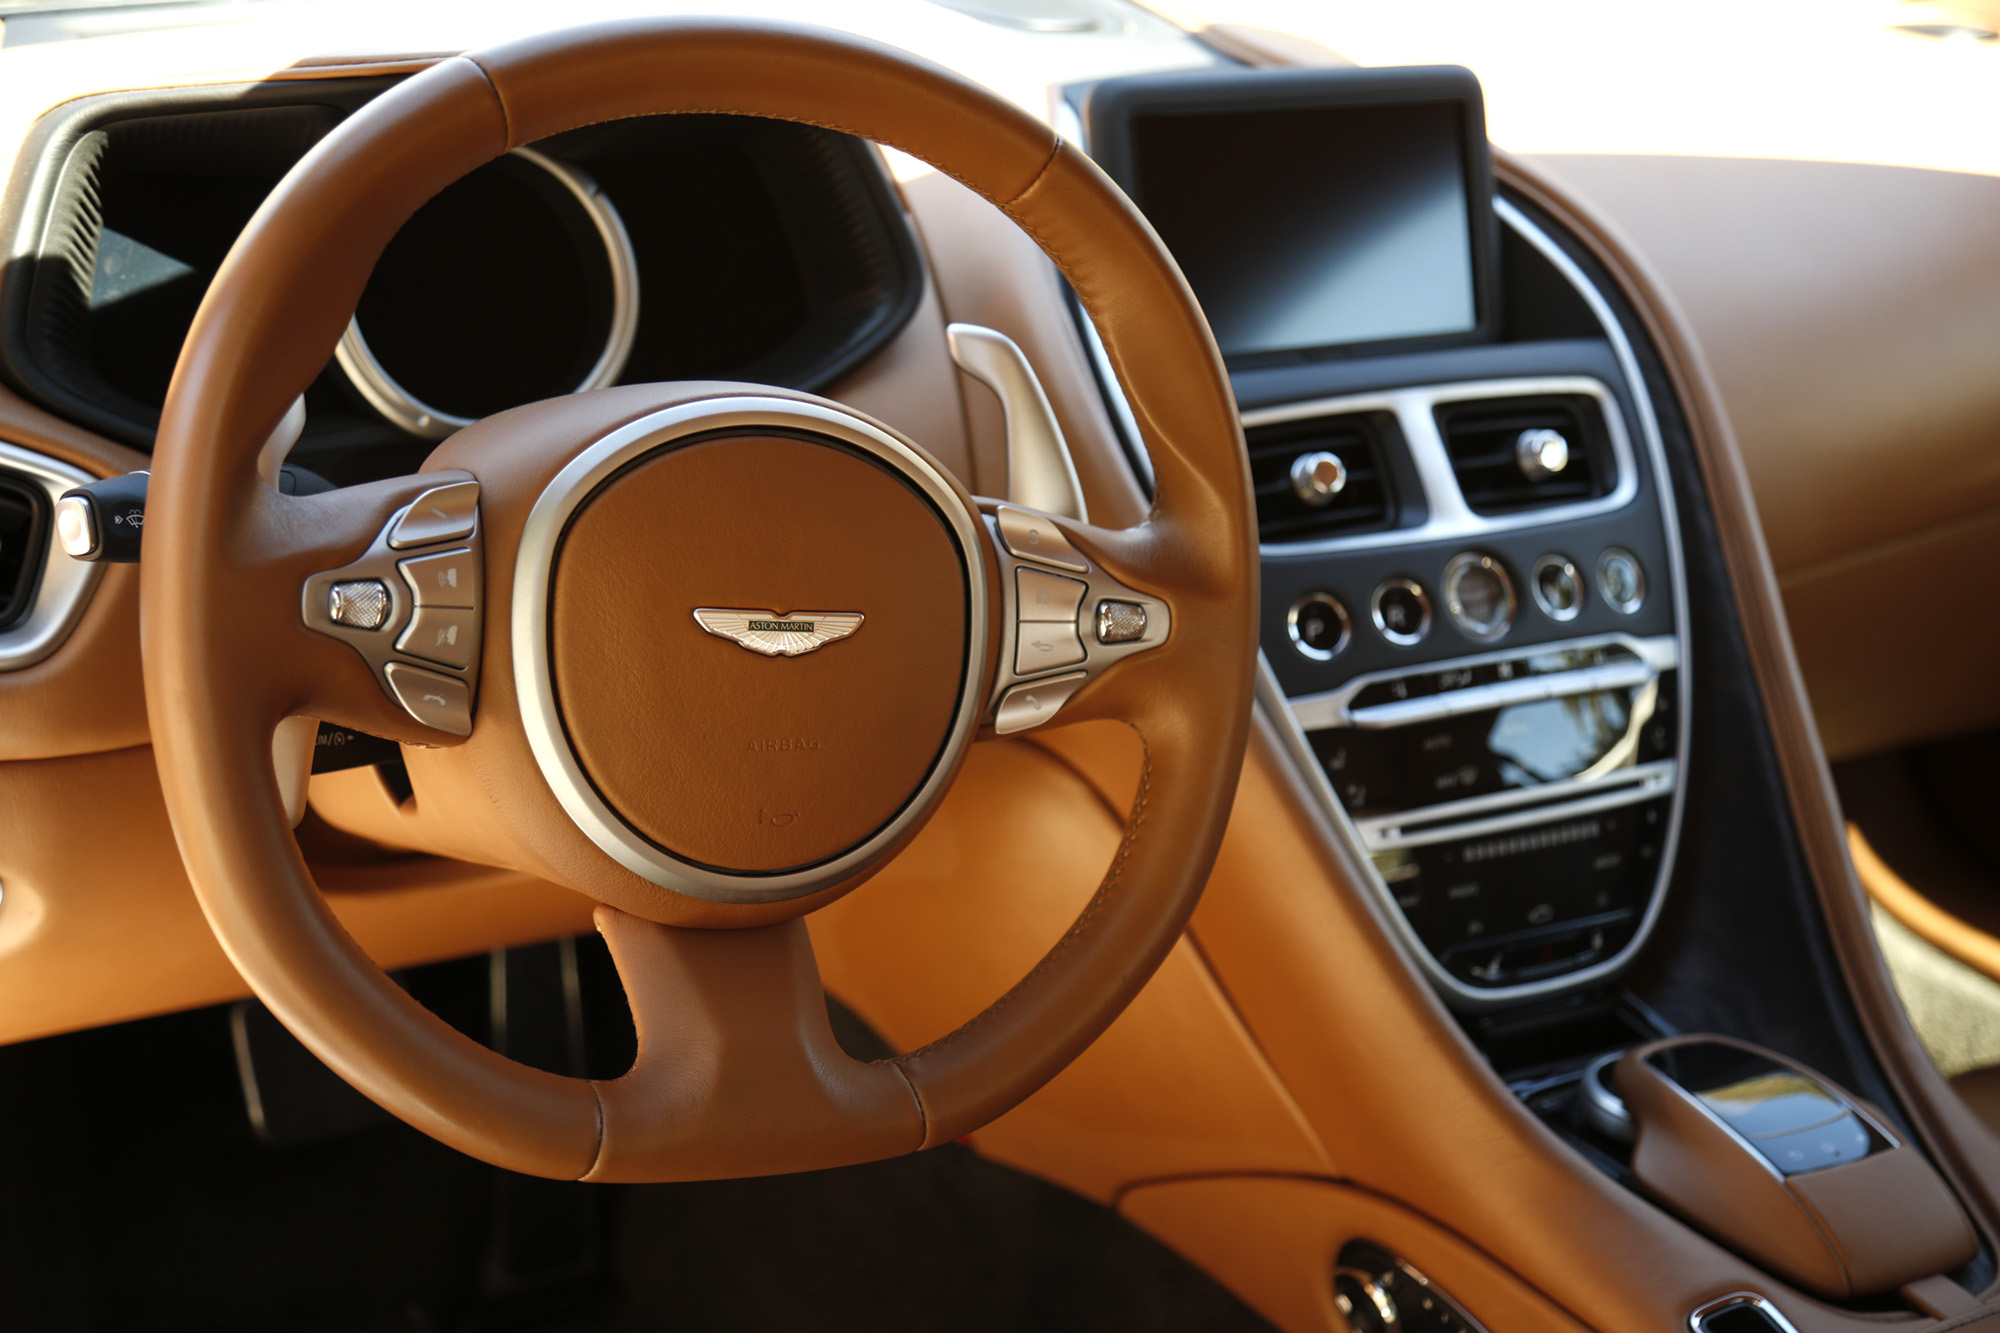 FIRST DRIVE: Aston Martin DB11 Leaves Soul Stirred, Not Shaken